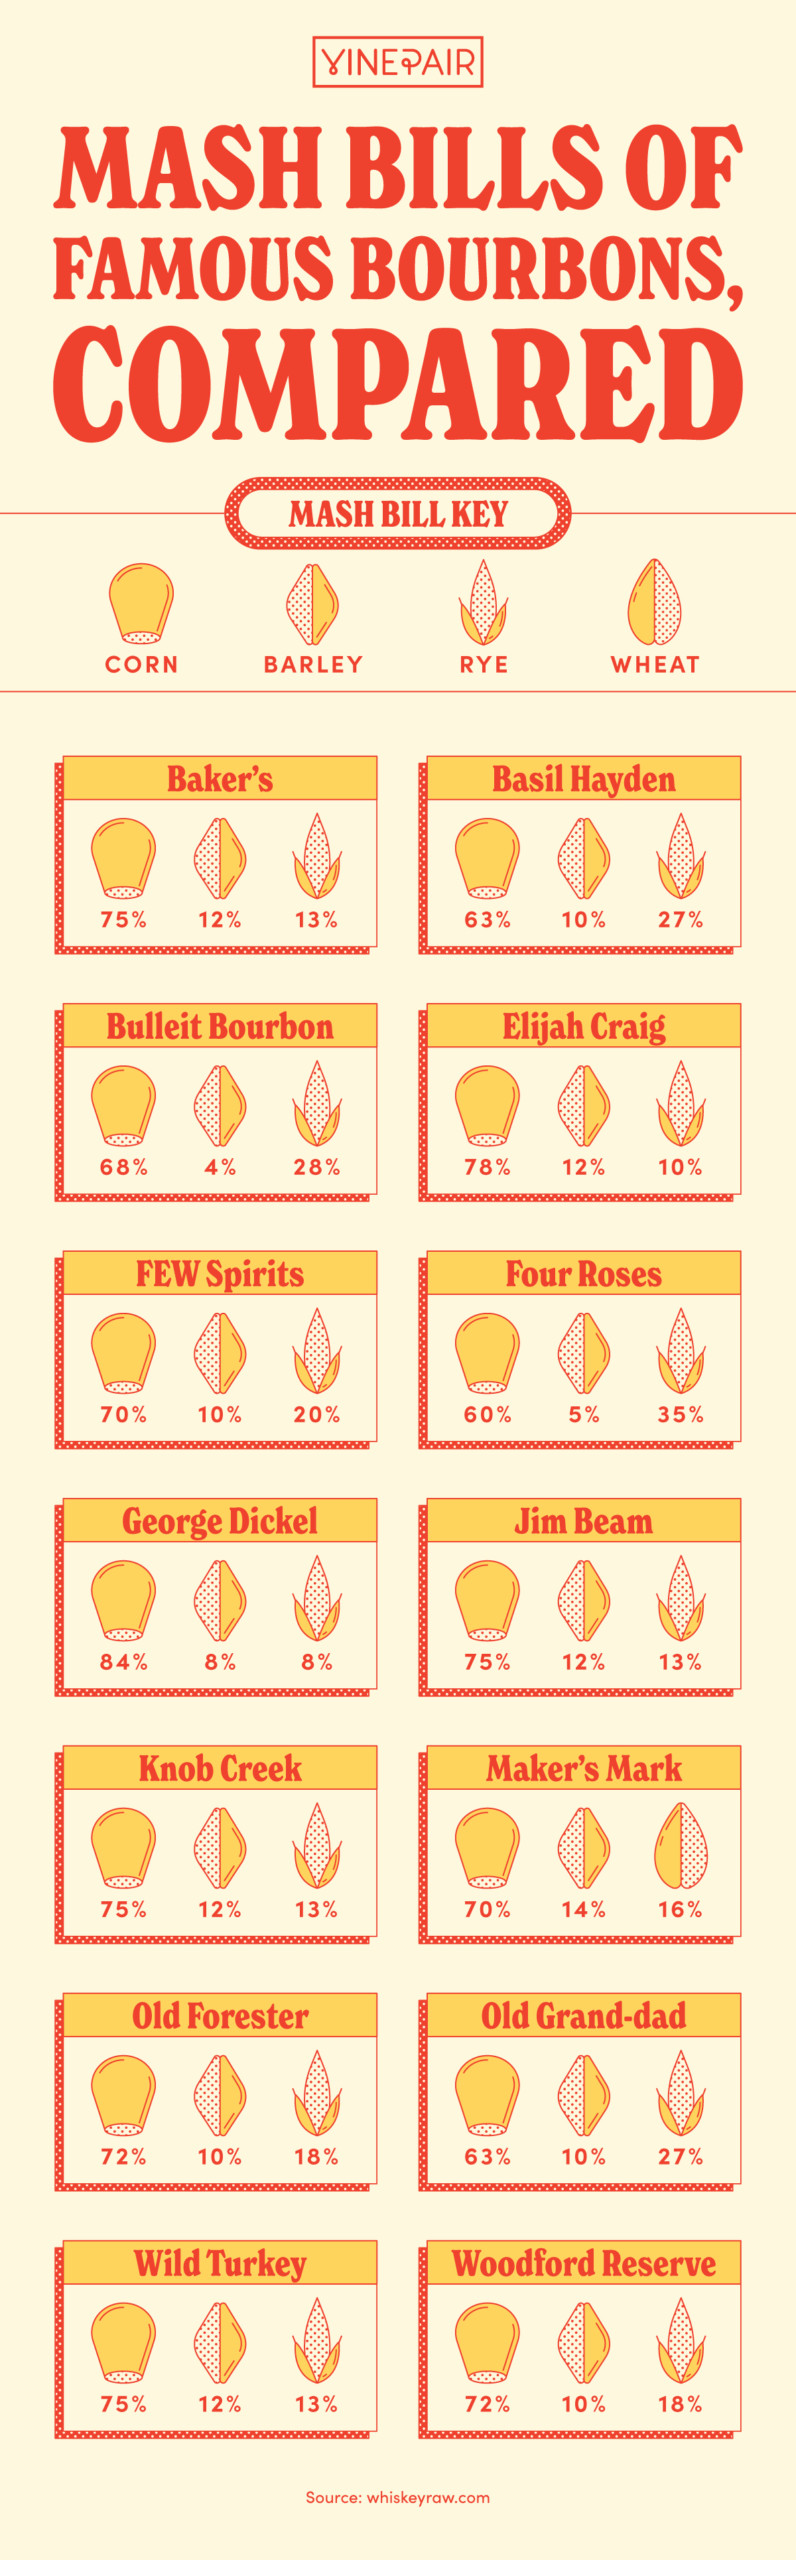 13 Famous Bourbon Mash Bills Compared